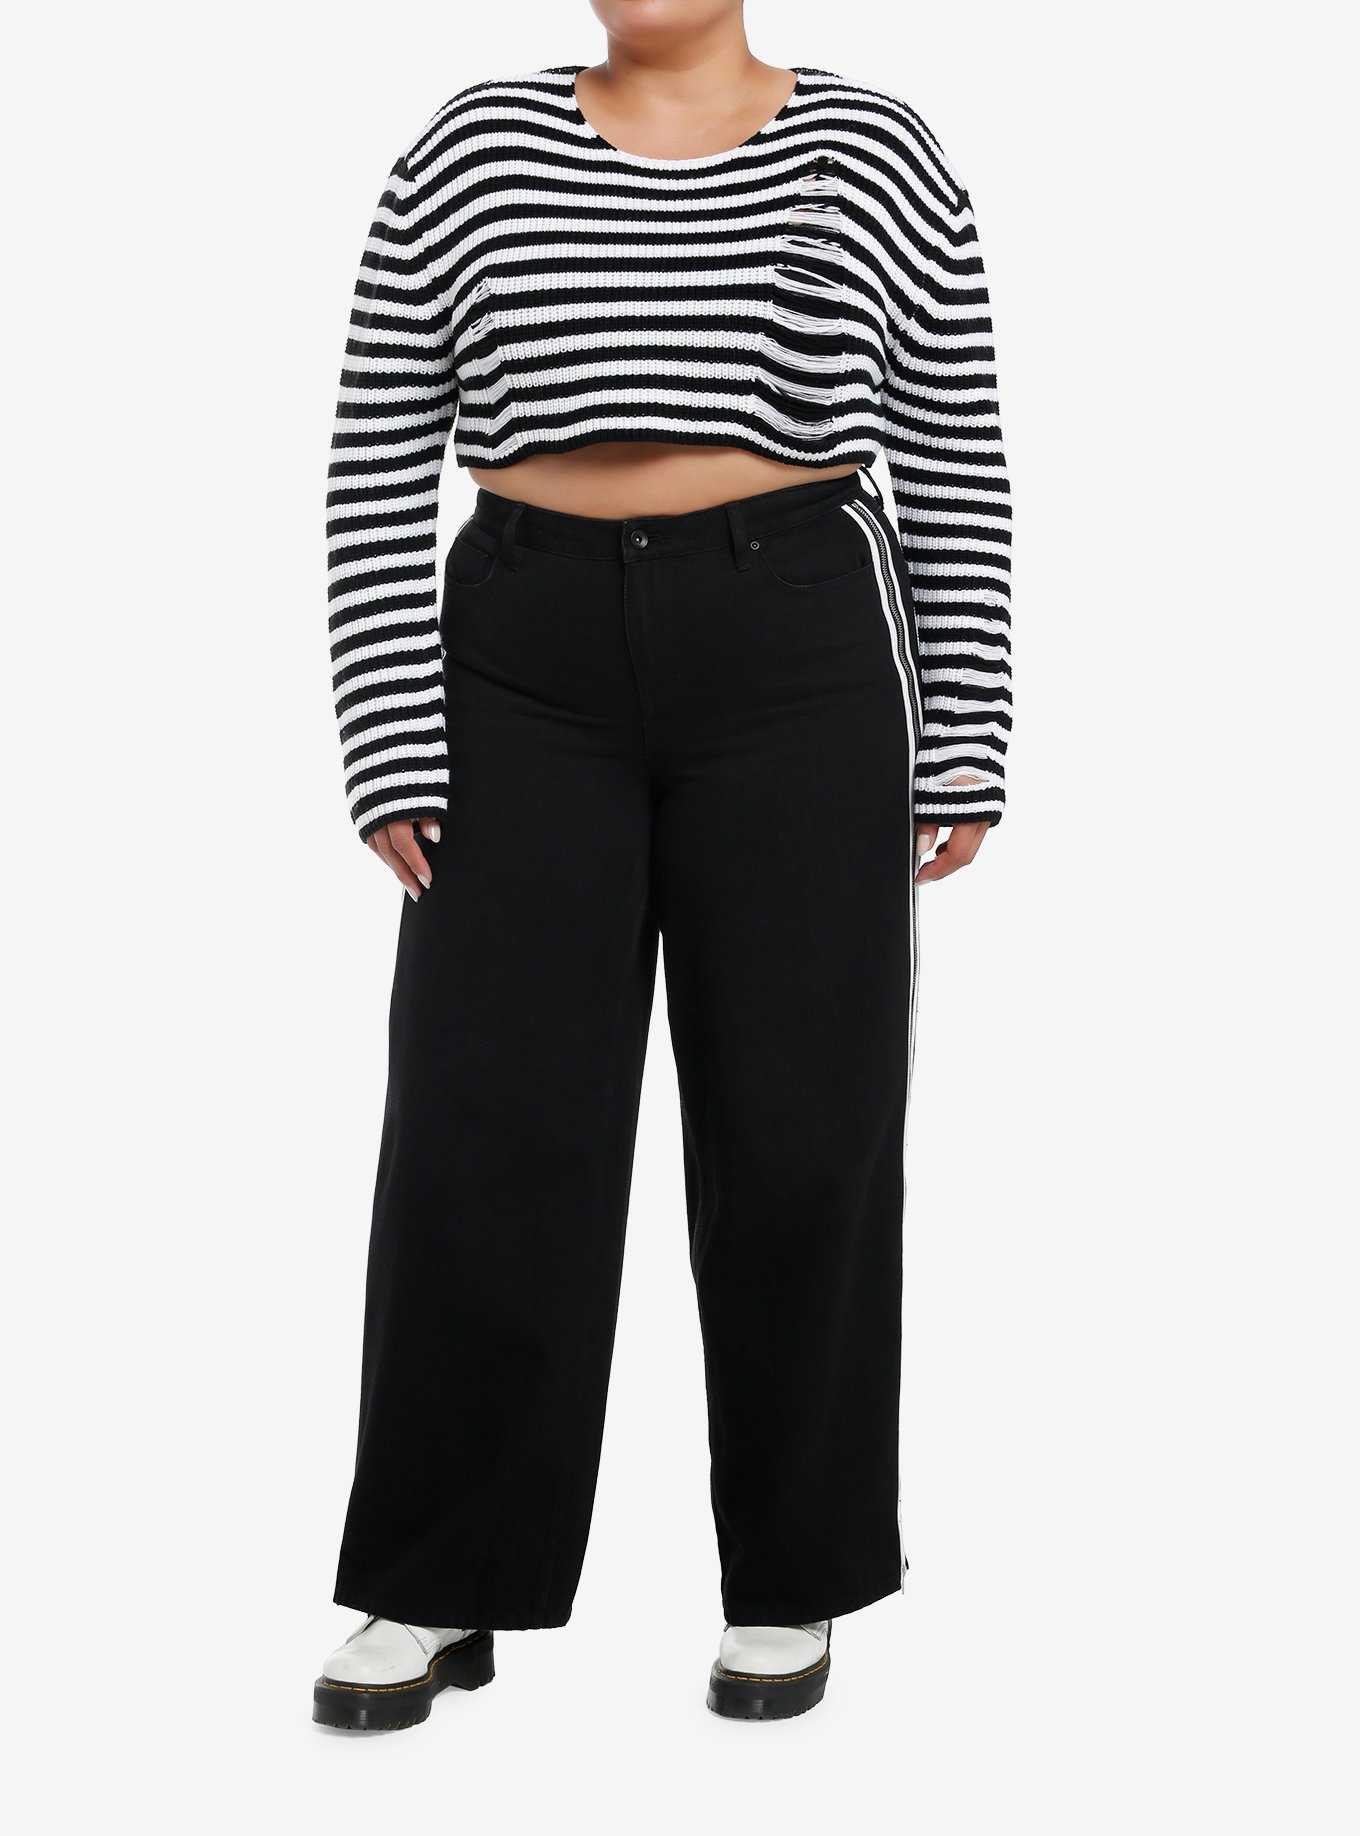 Social Collision Black & White Stripe Destructed Girls Crop Sweater Plus Size, , hi-res